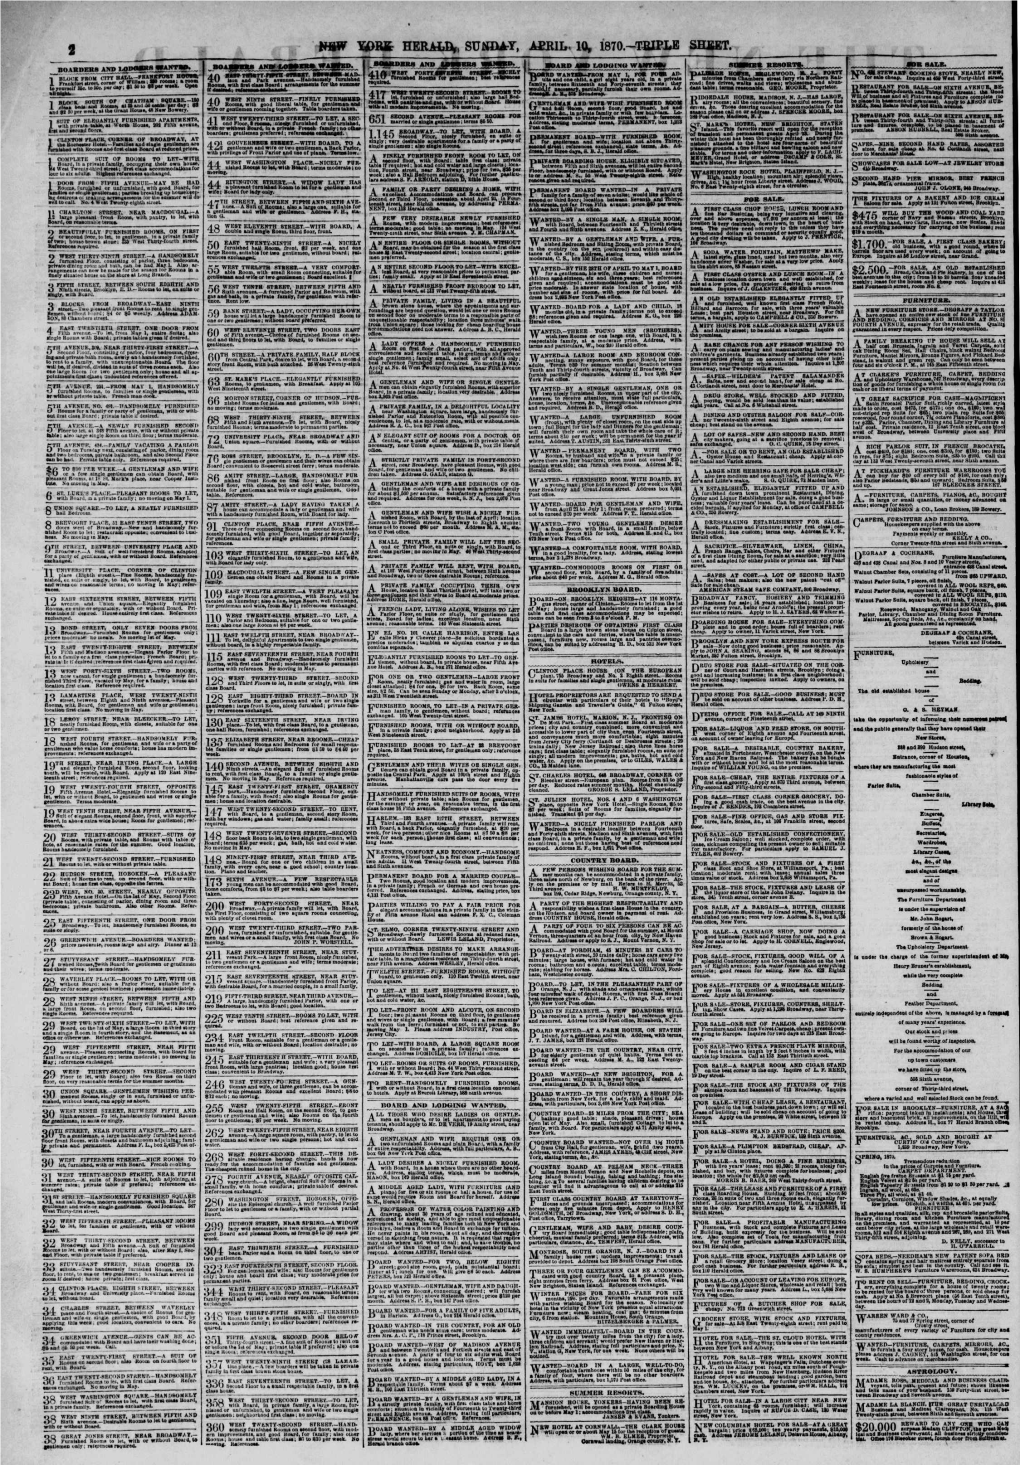 Ork Herald, Sunday, Acril 10, 1870..T-Biplb Sheet